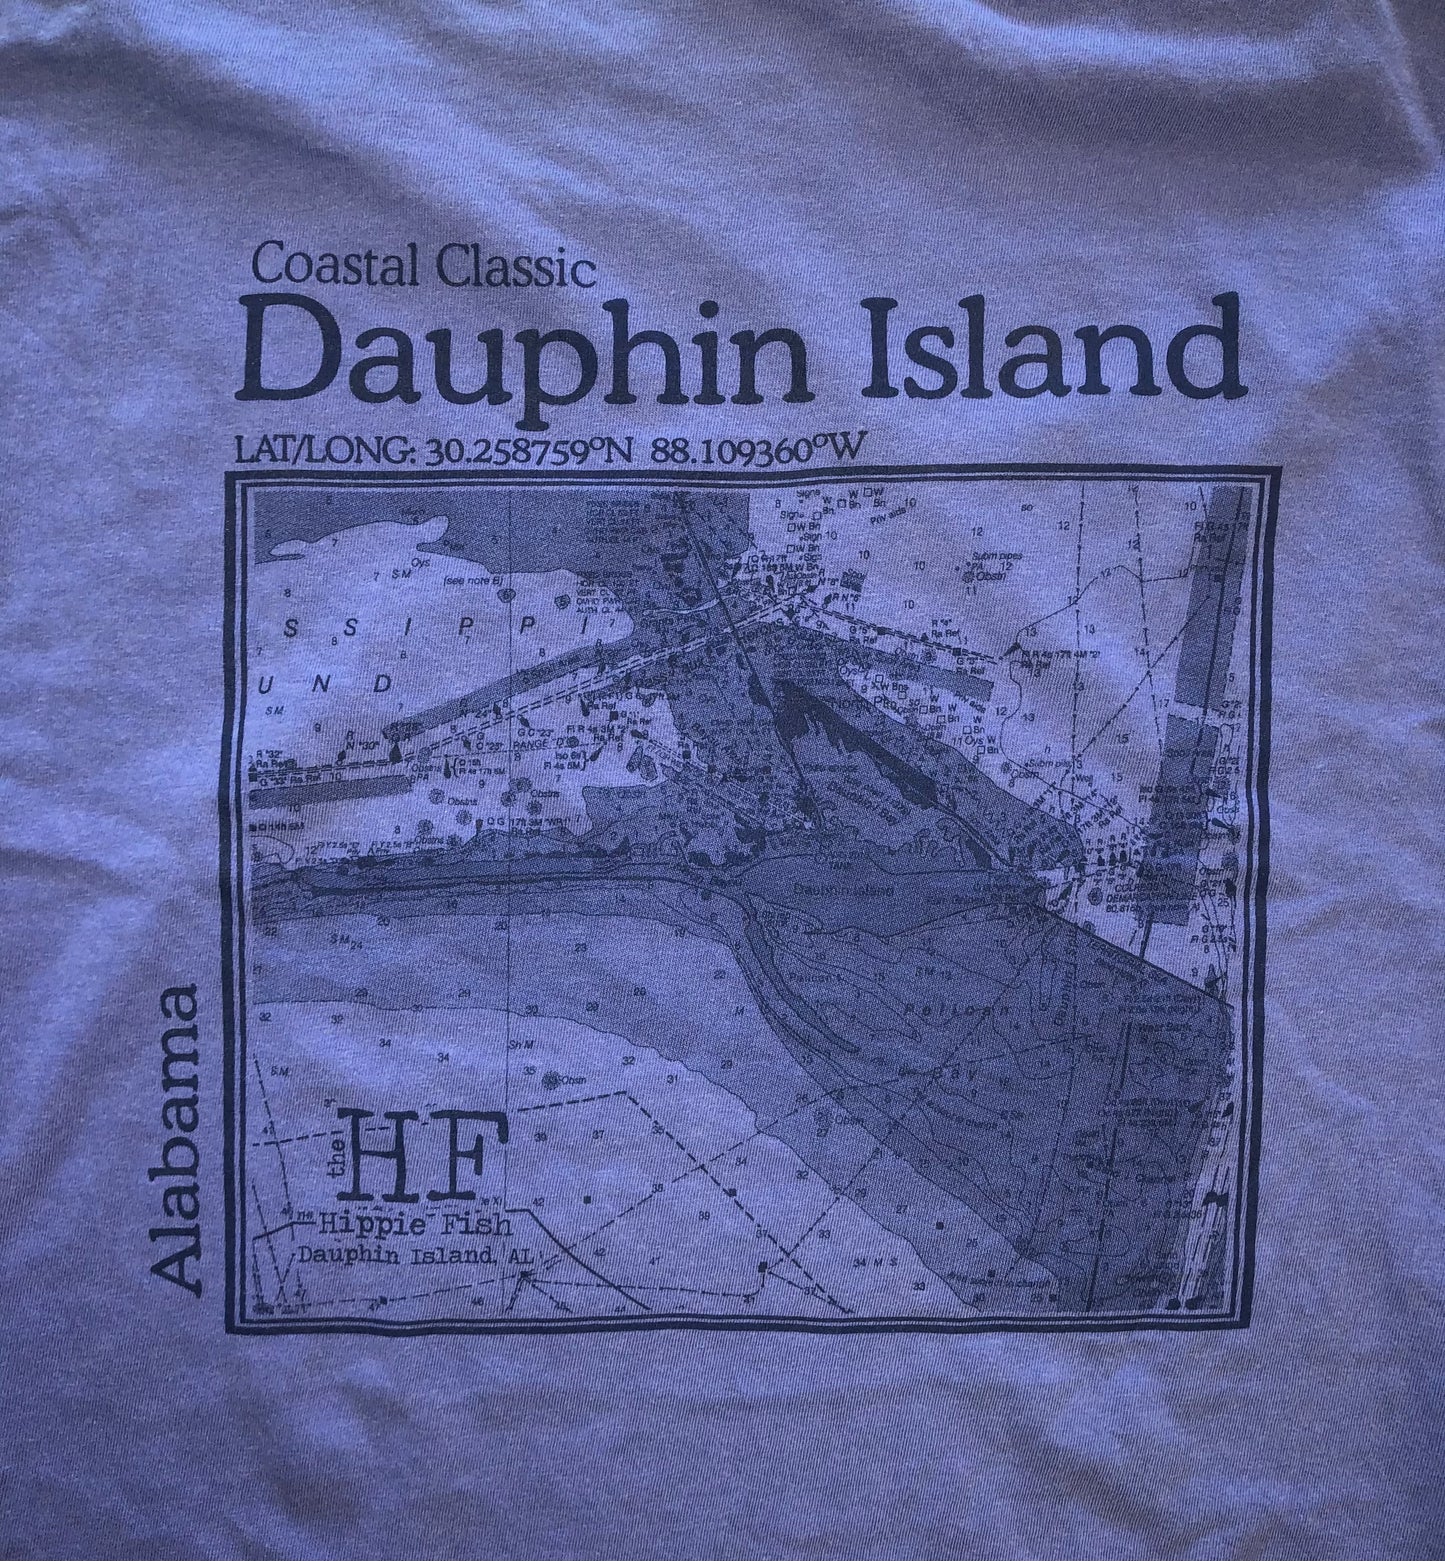 DAUPHIN ISLAND MAP SHIRT SHORT SLEEVE